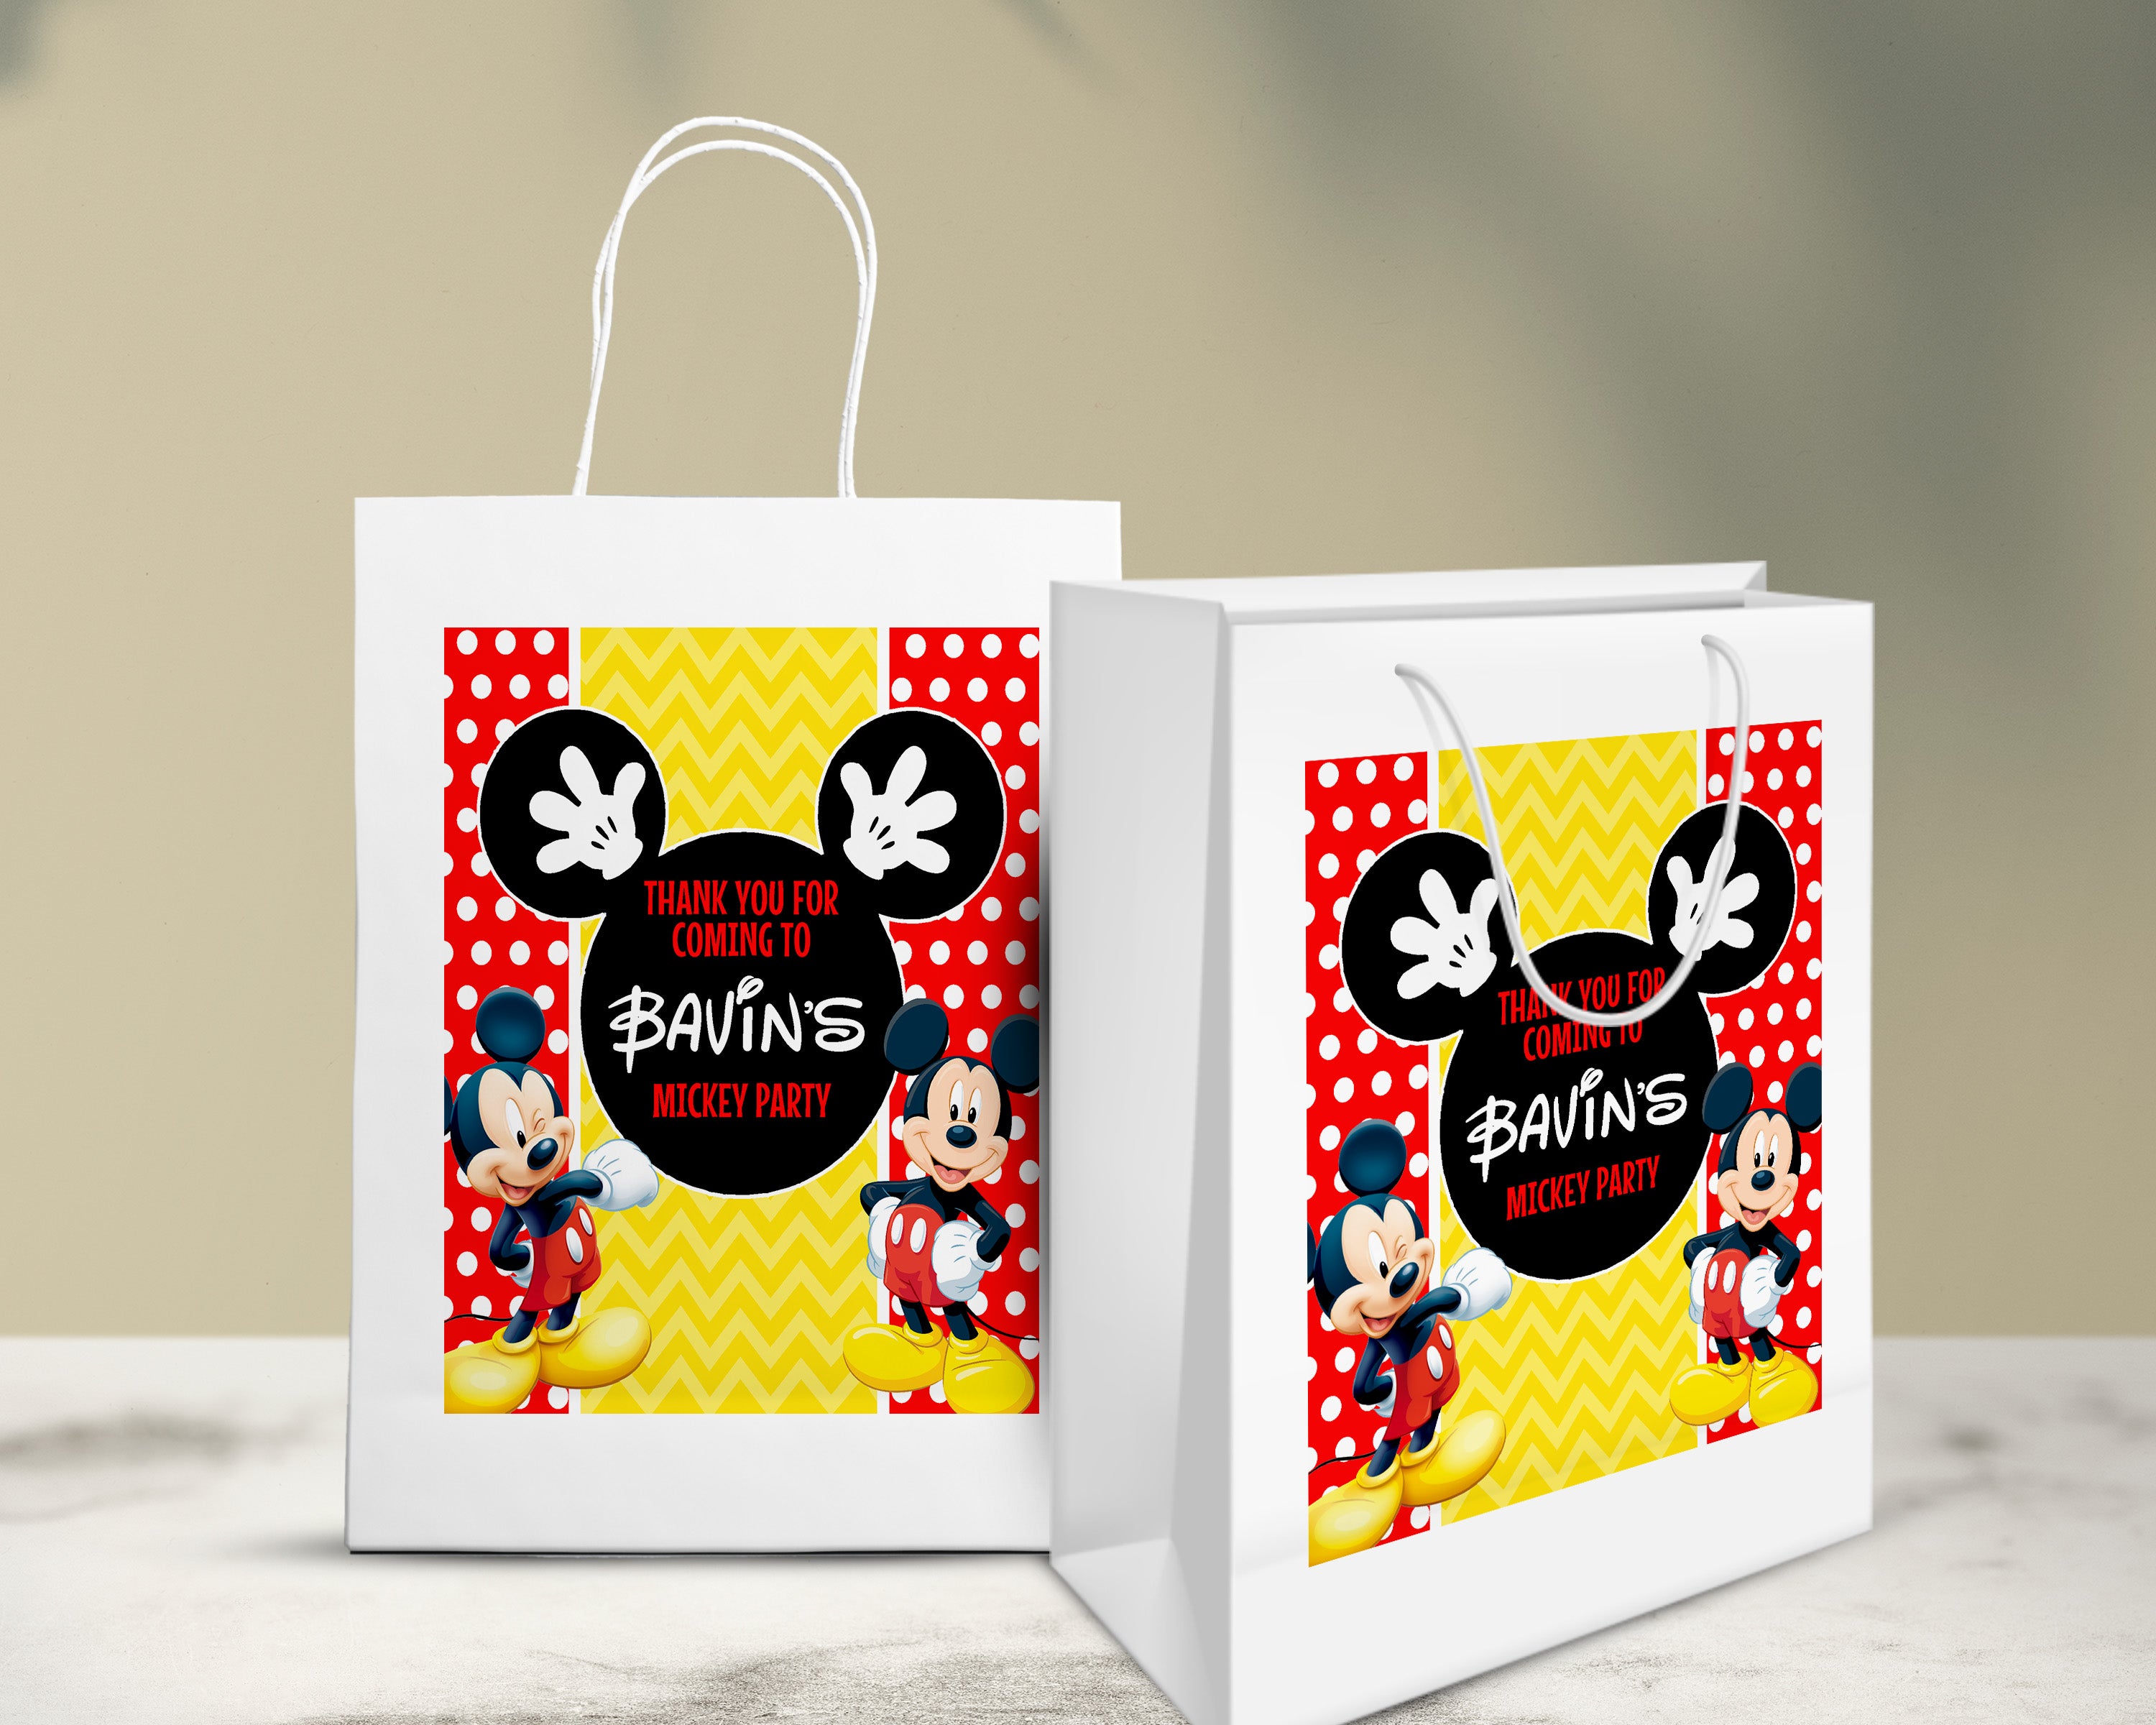 PSI Mickey Mouse Theme Oversized Return Gift Bag